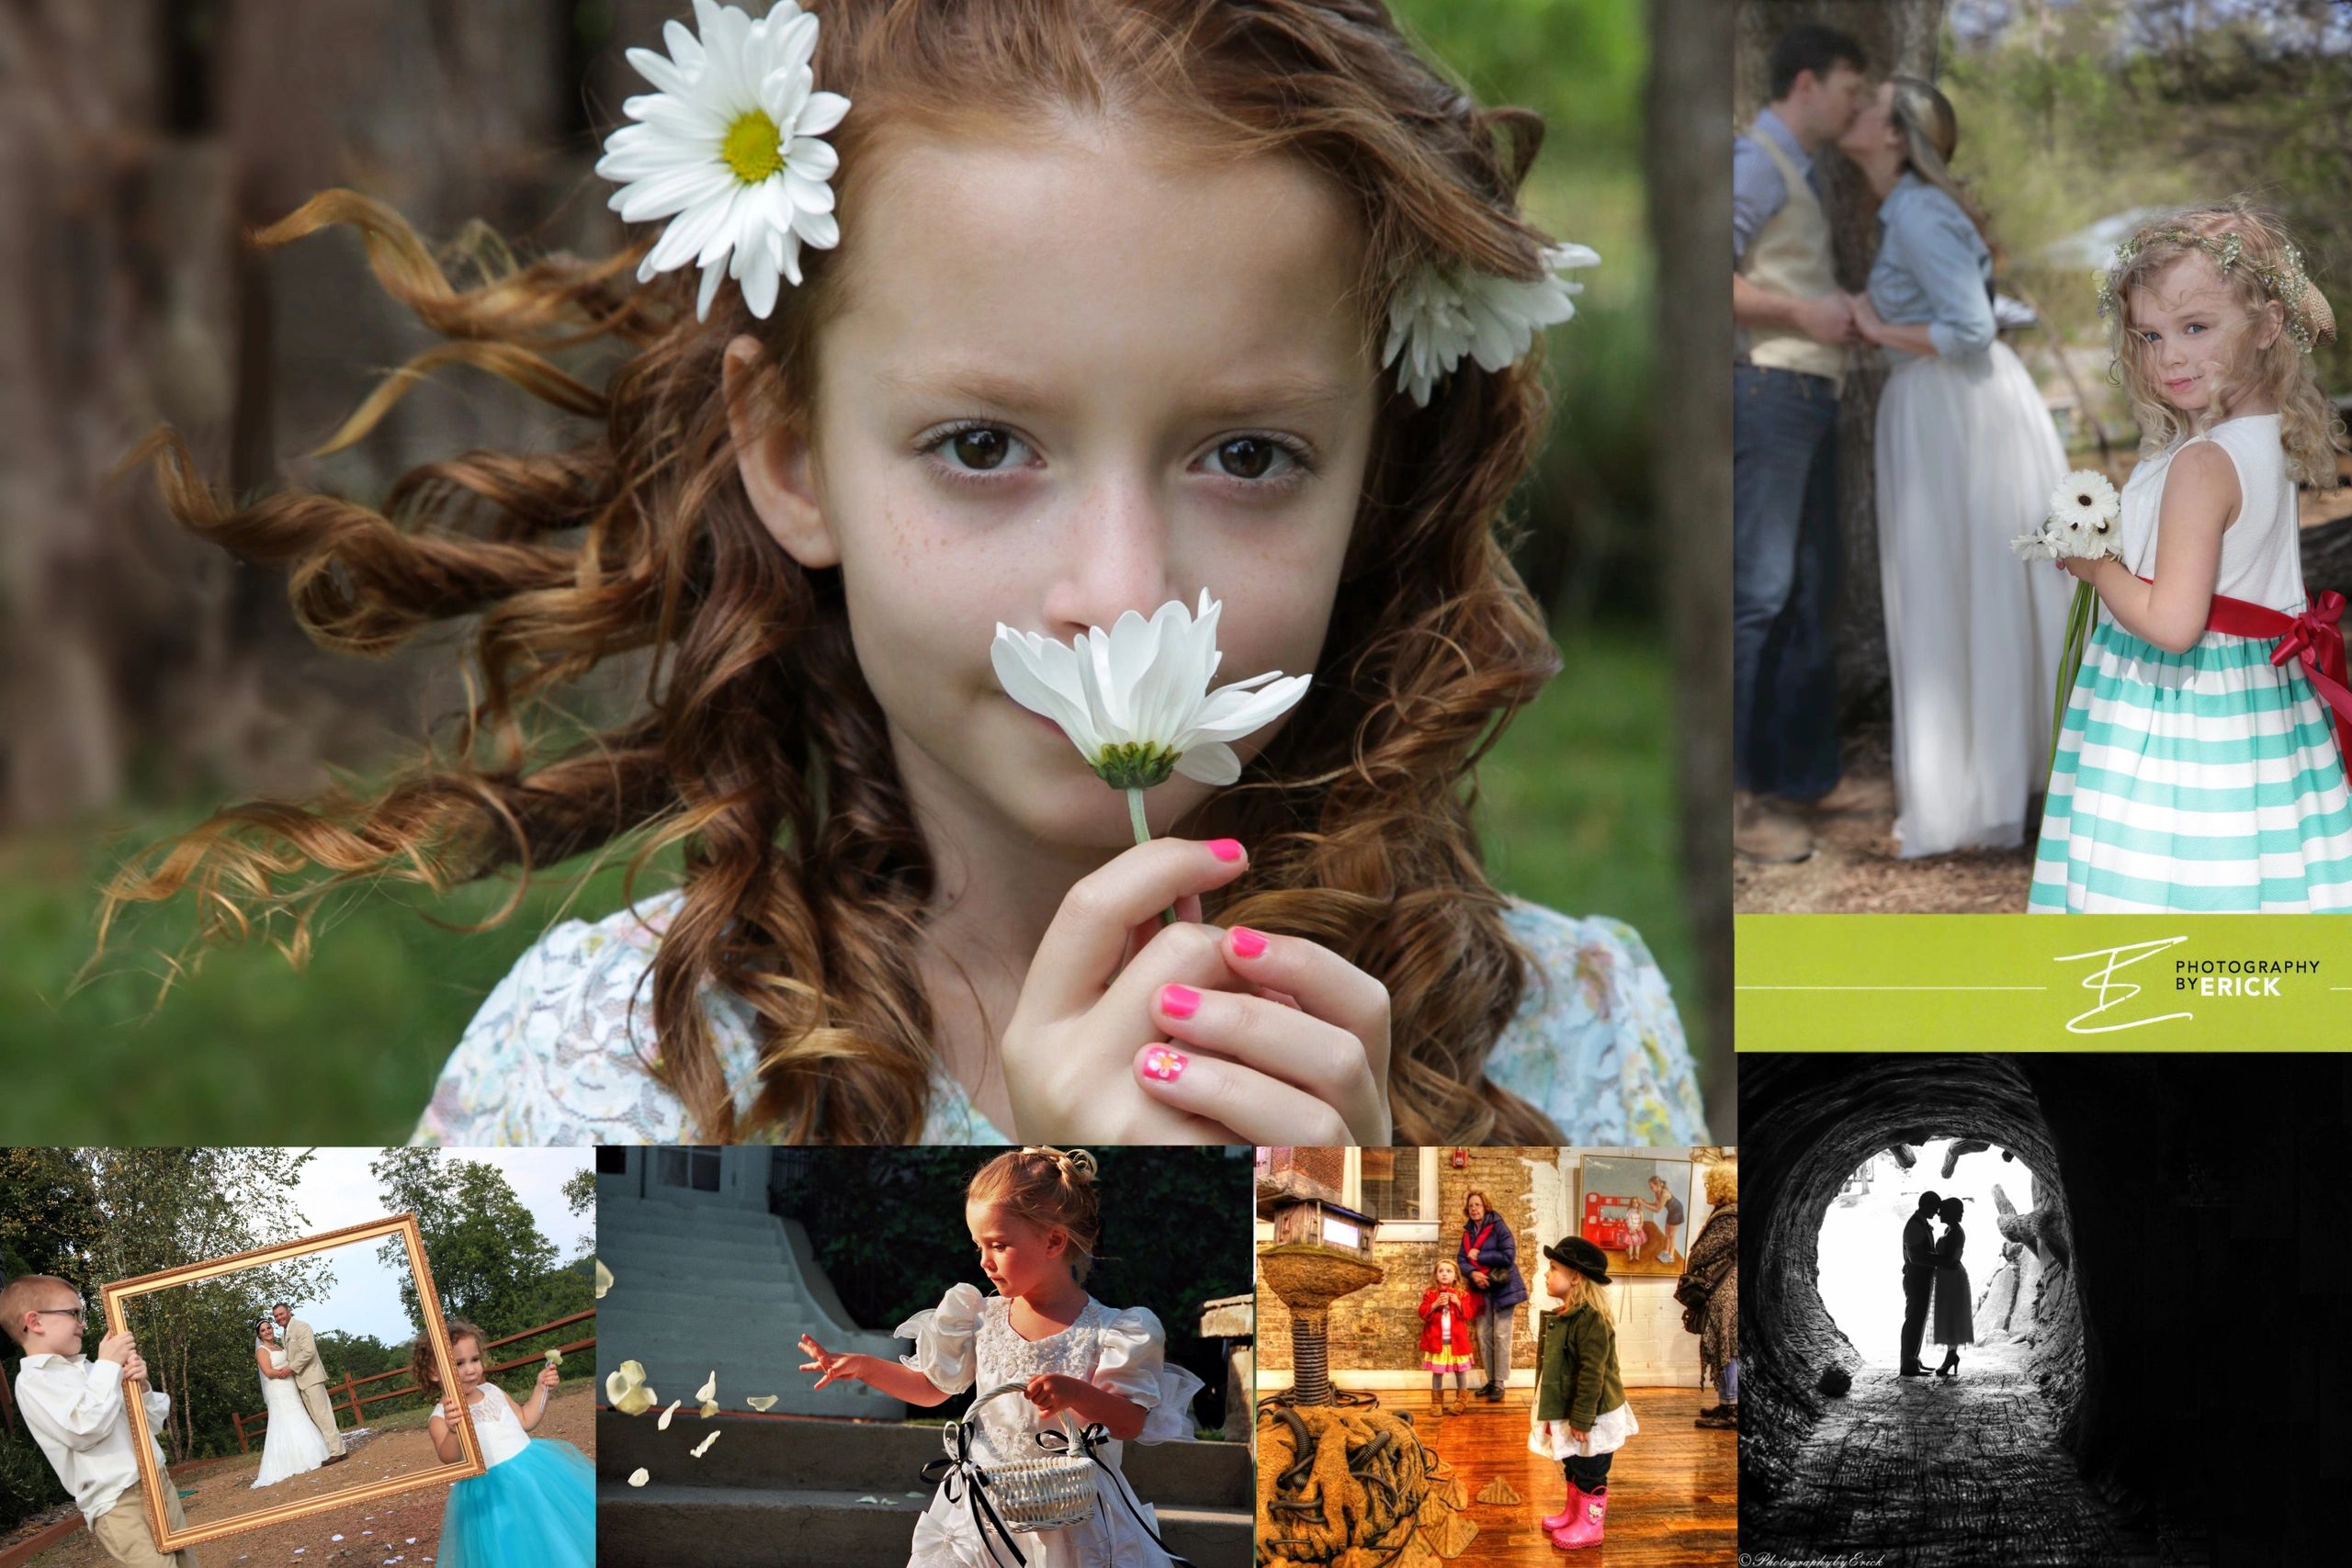 Weddings engagements family photography art photography
